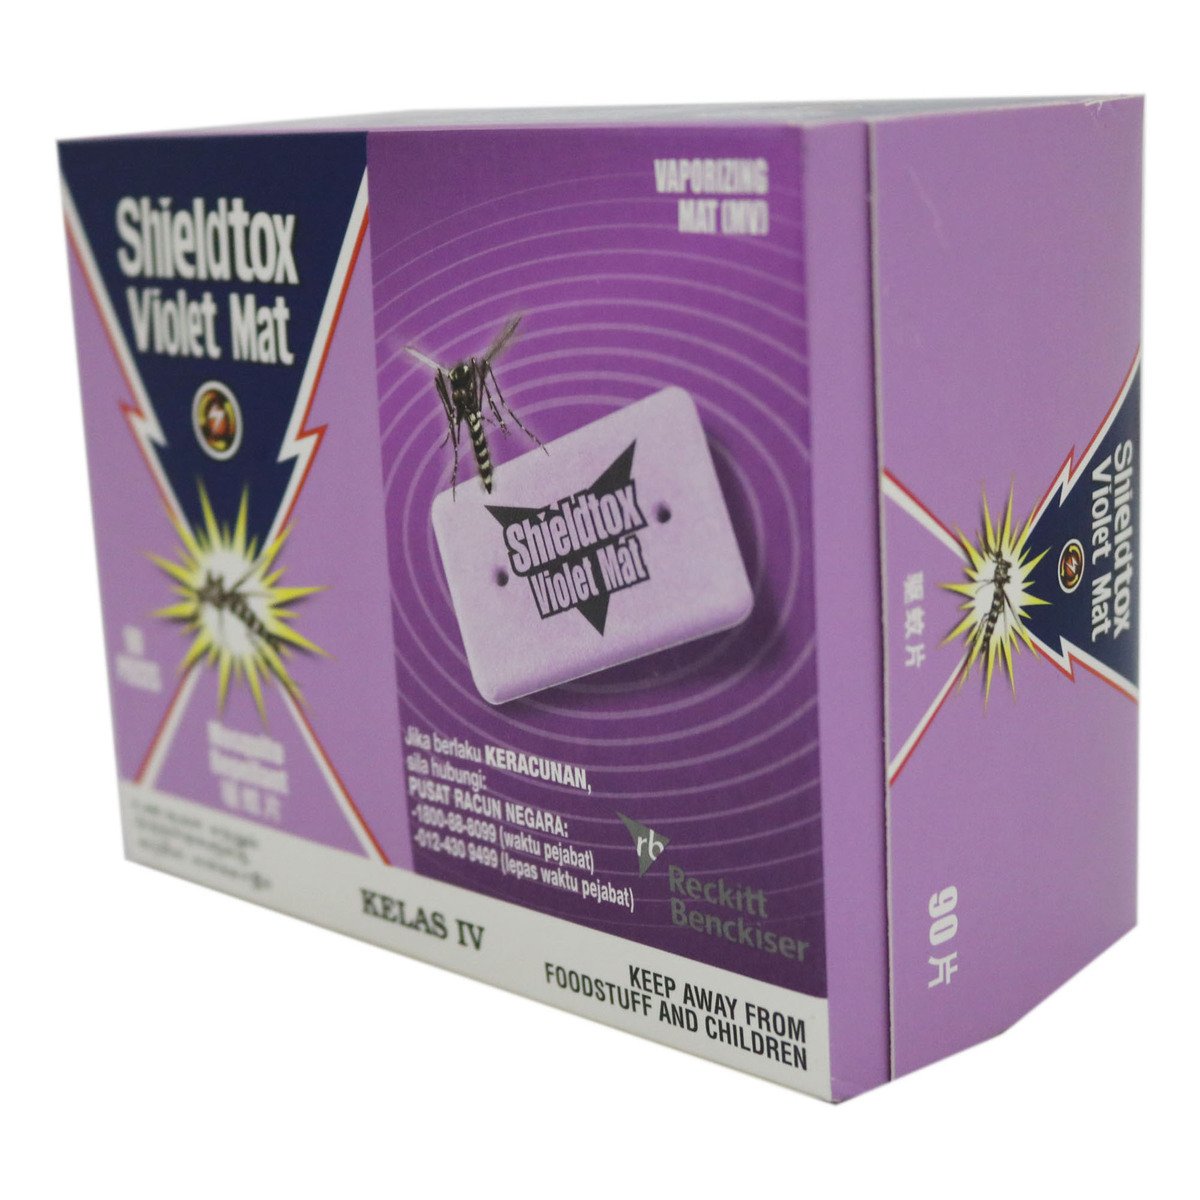 Shieldtox Violet Mat Refill 90pcs